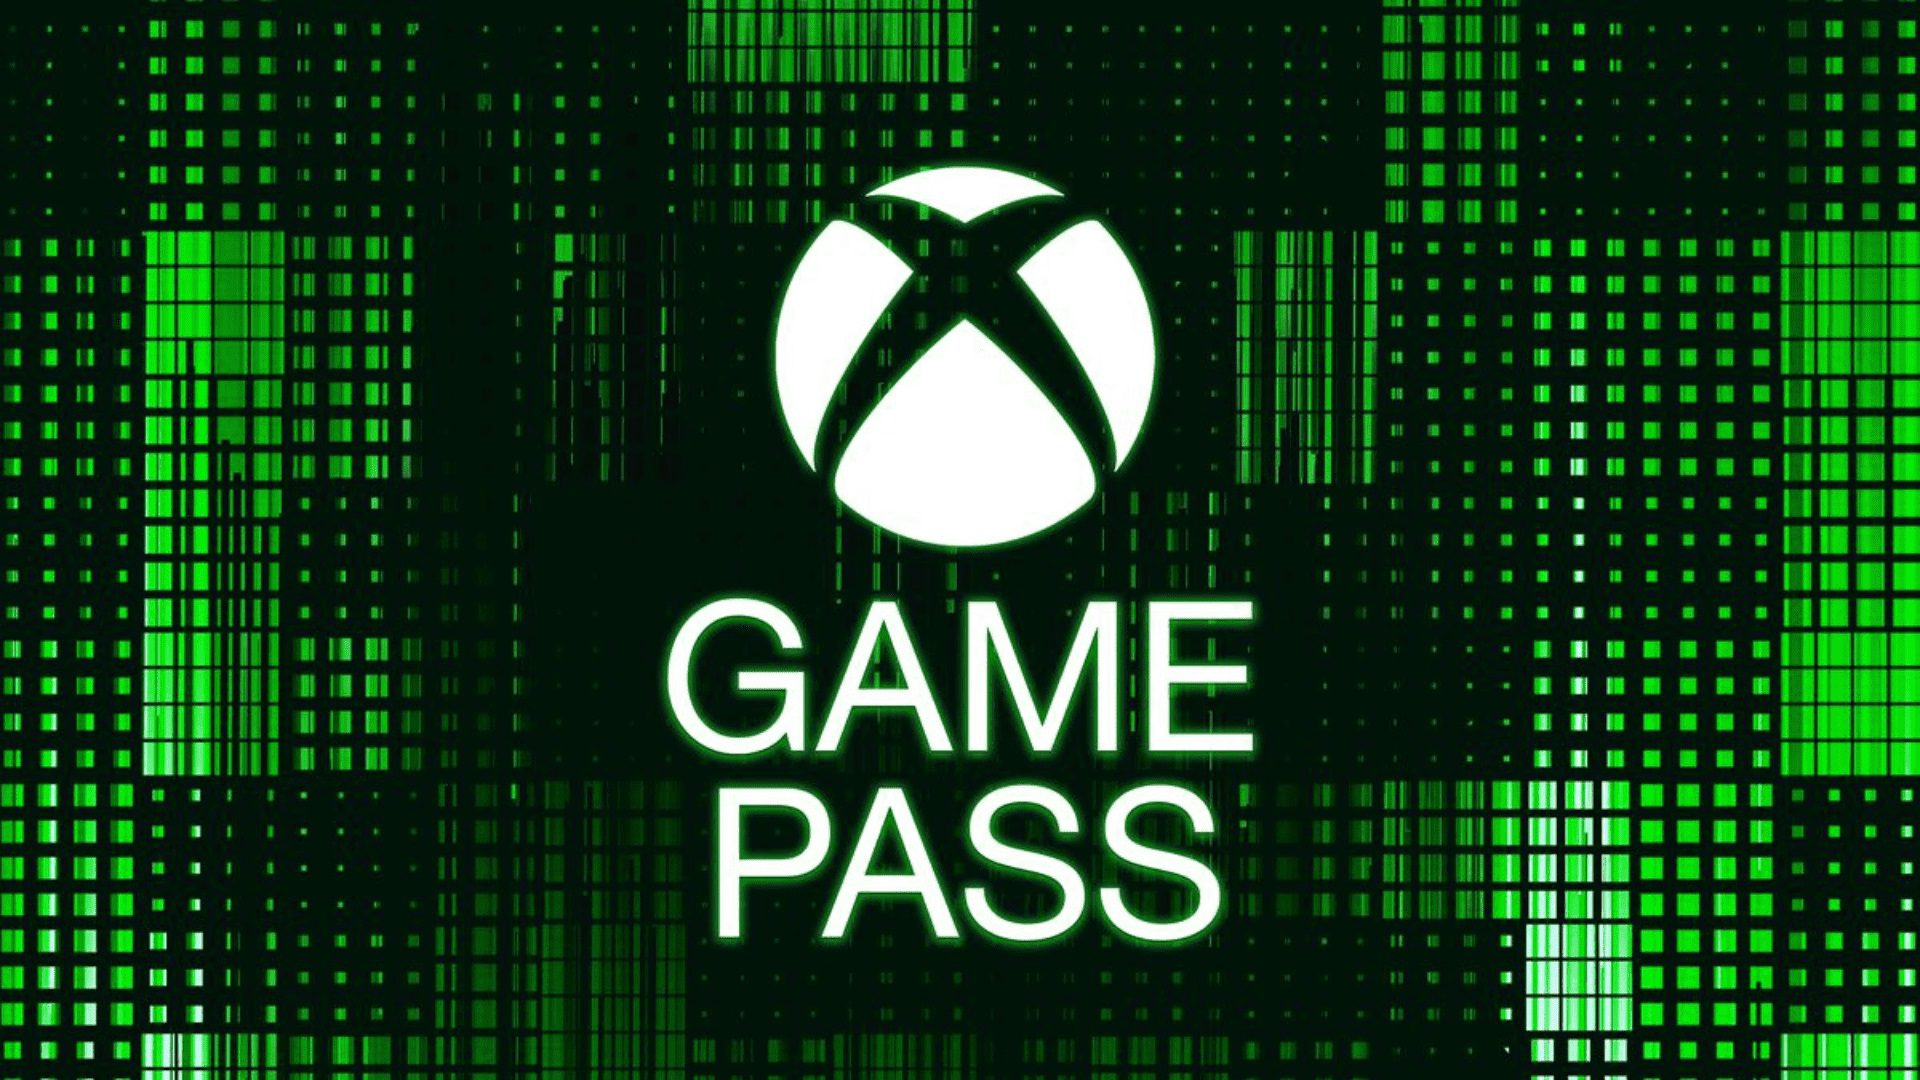 pc xbox game pass